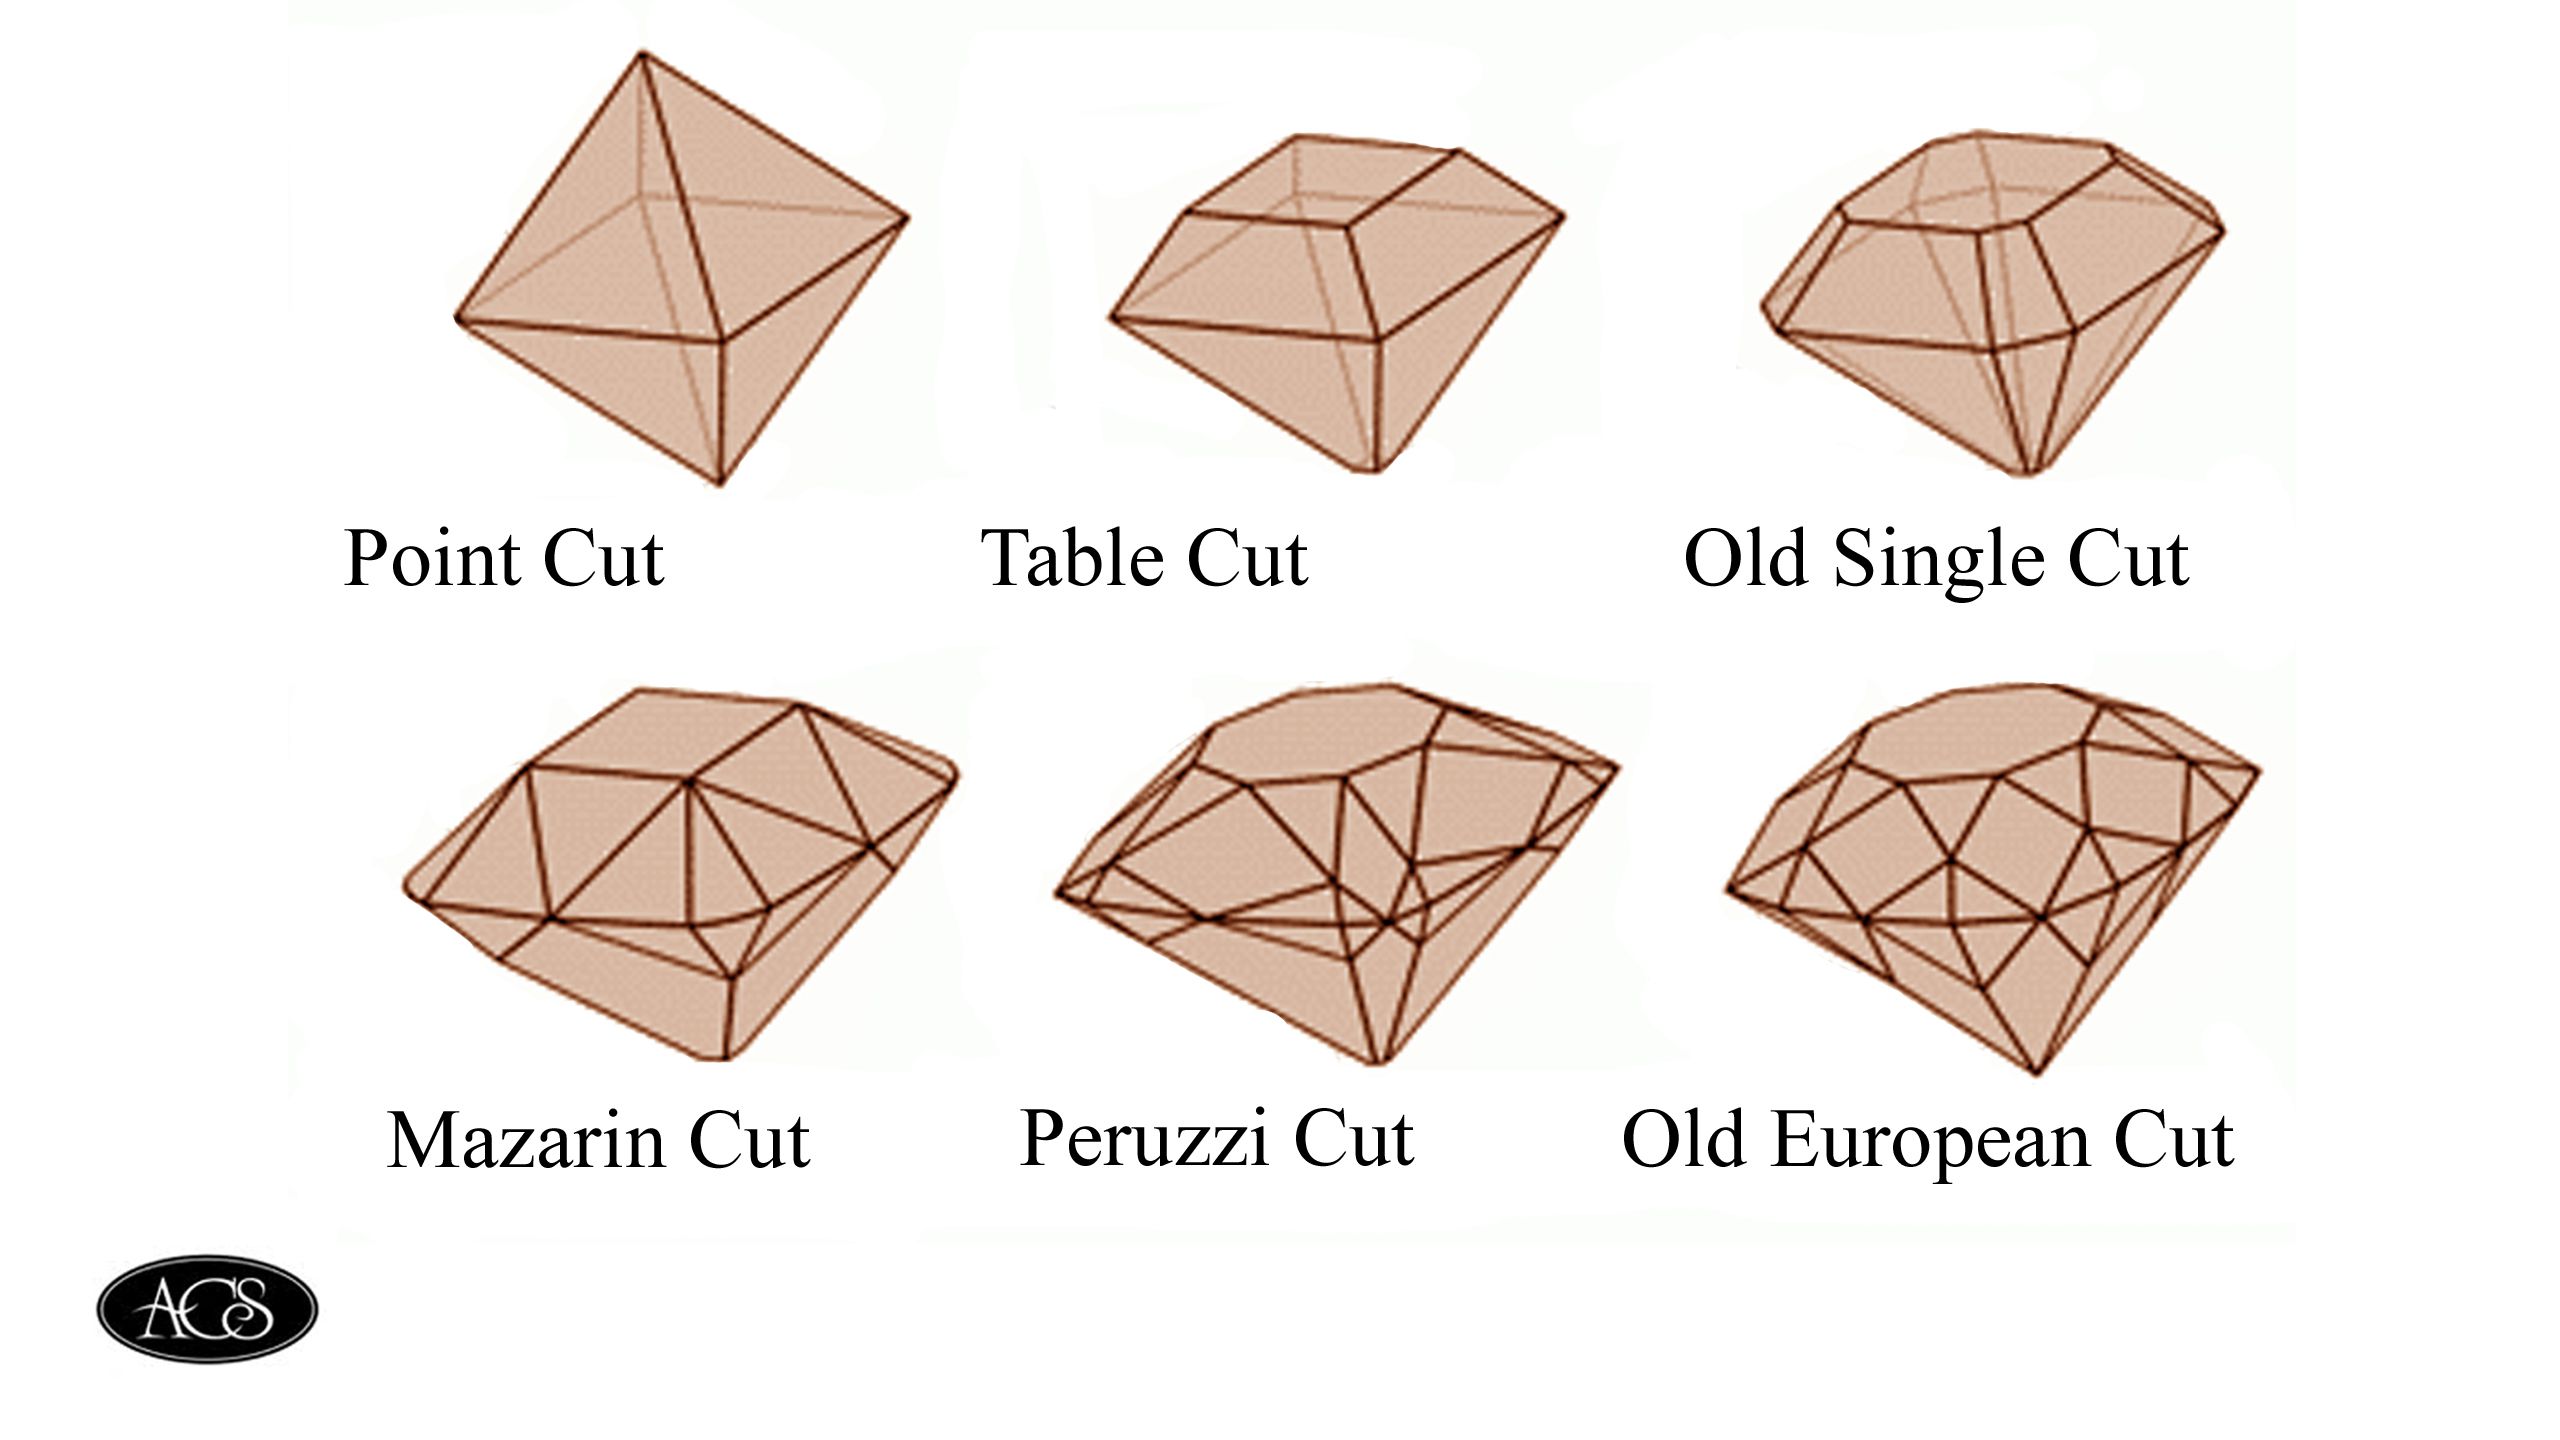 diamond cuts